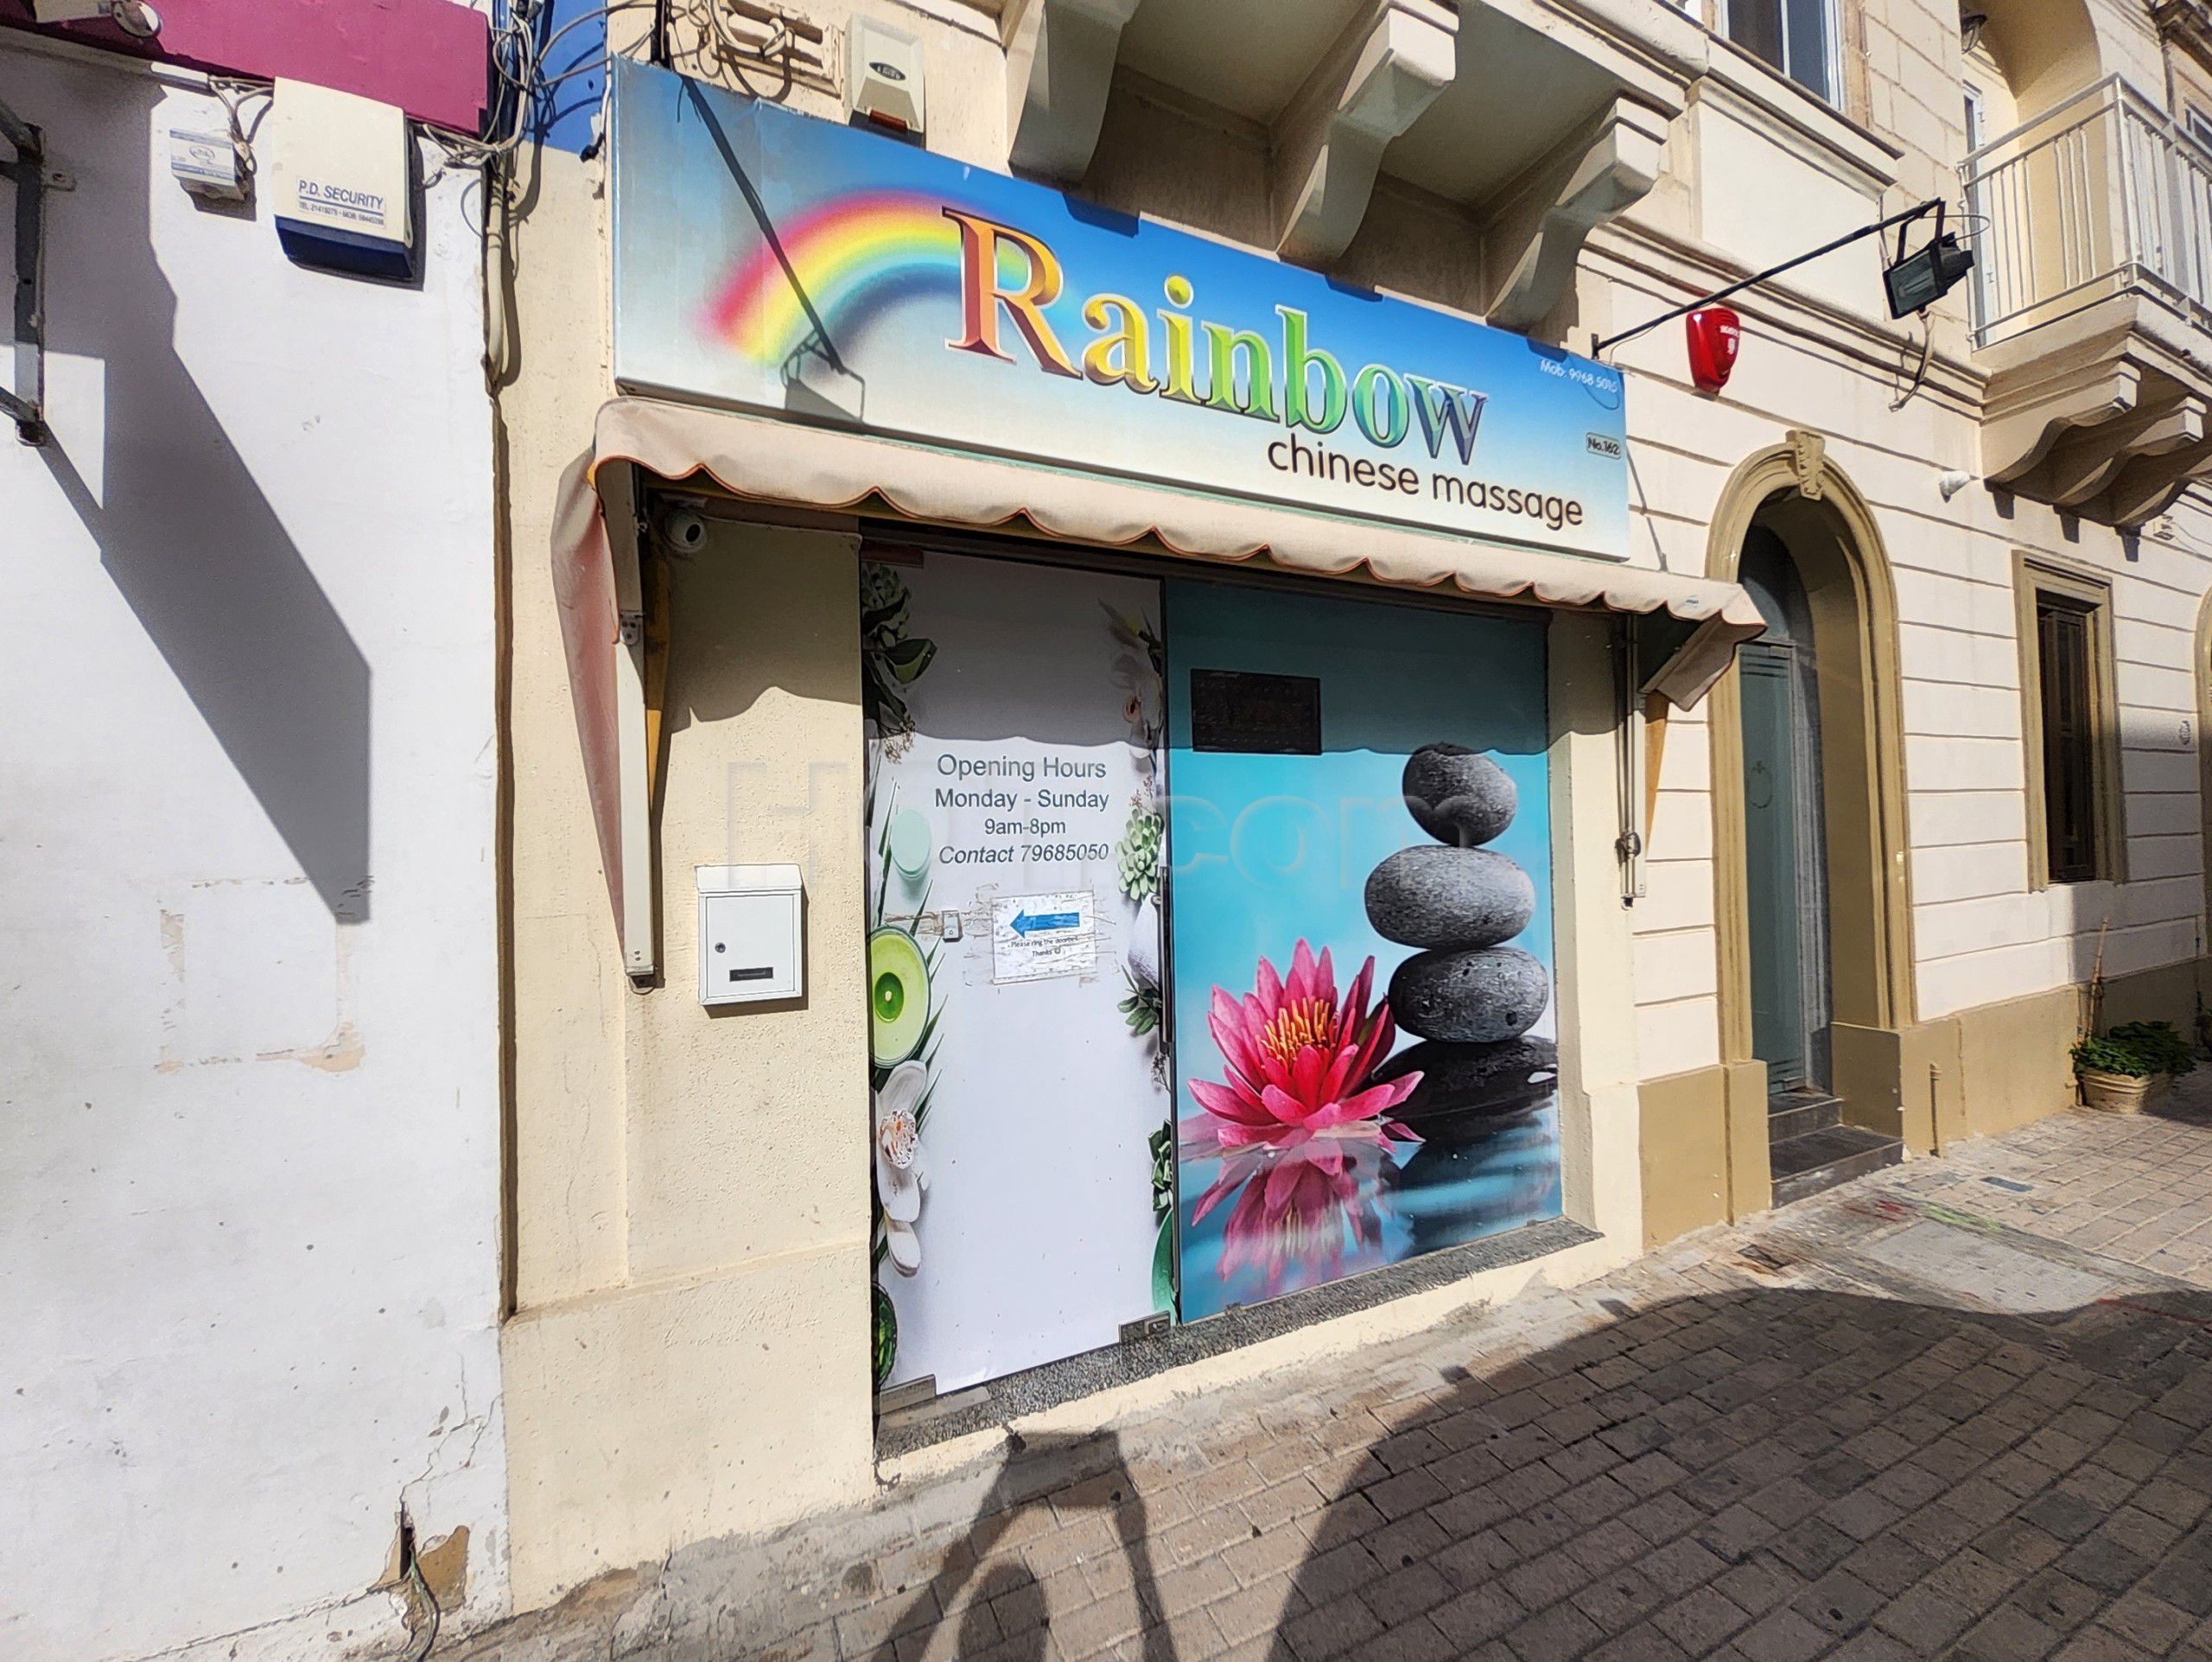 Mosta, Malta Rainbow Chinese Massage